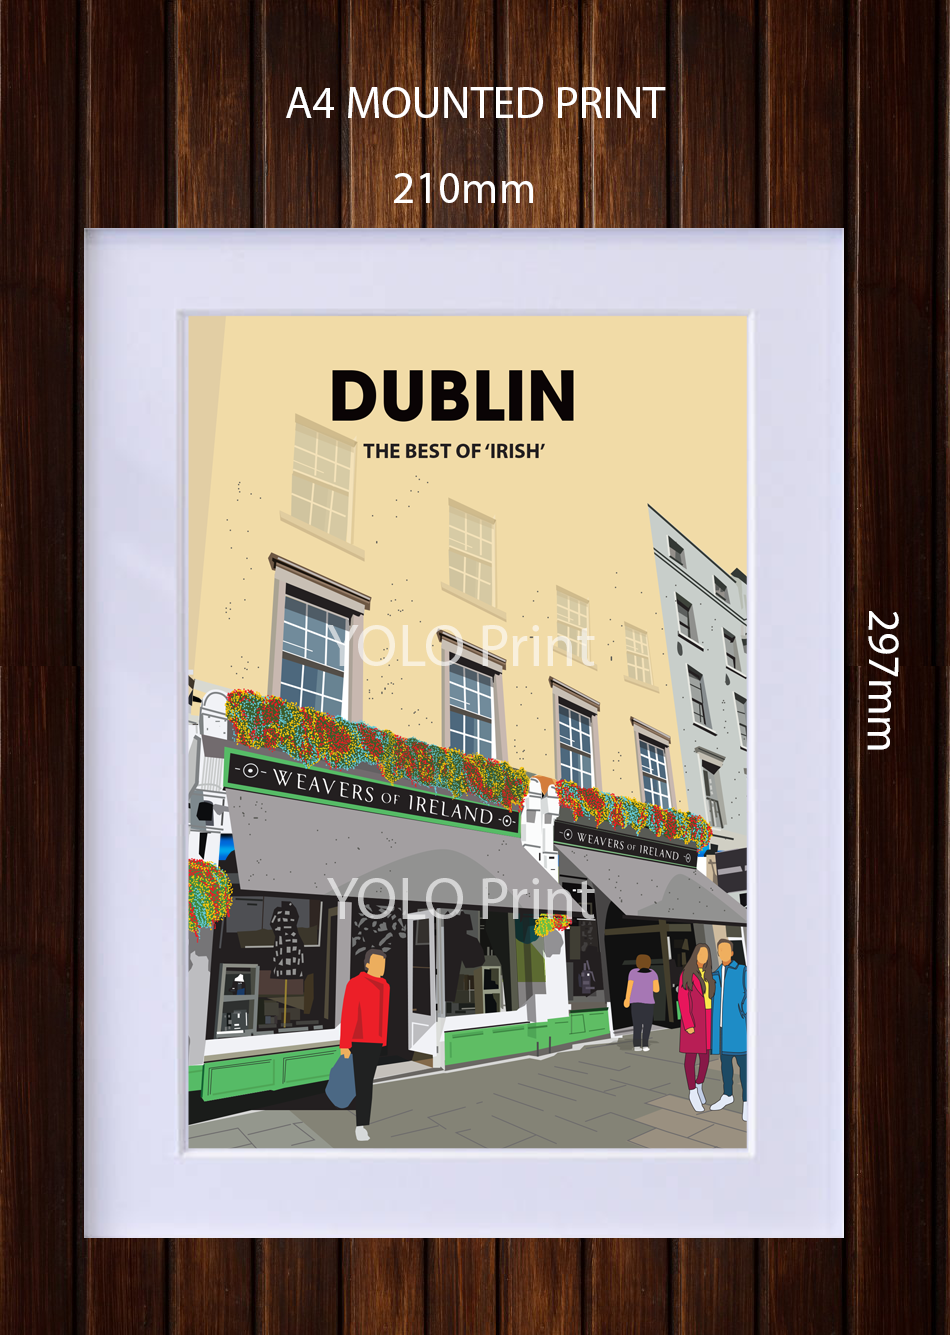 Dublin Postcard or A4 Mounted Print  - Weavers of Ireland